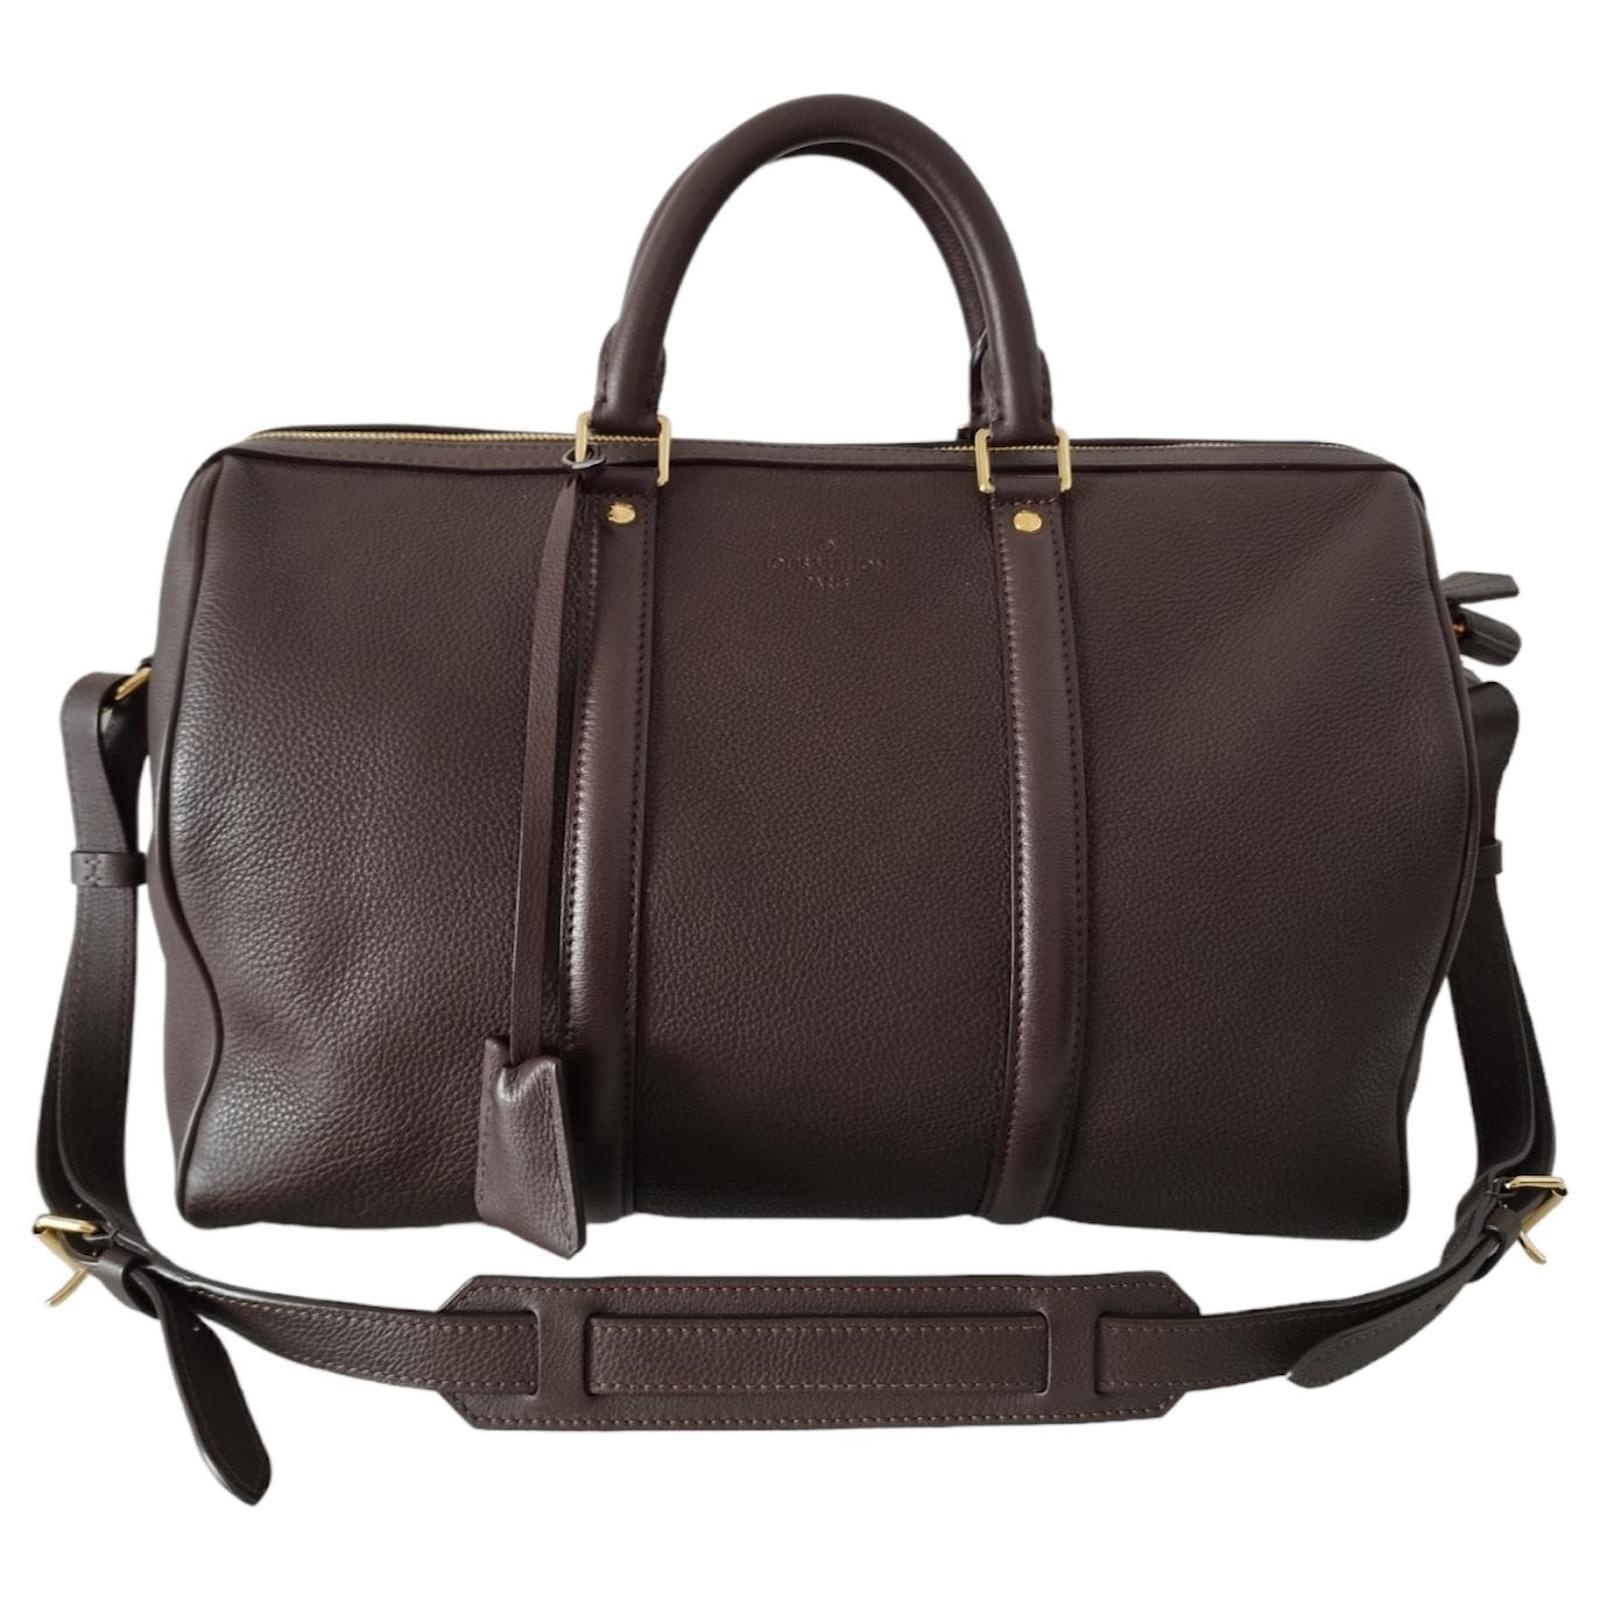 New Handbag: Sofia Coppola for Louis Vuitton